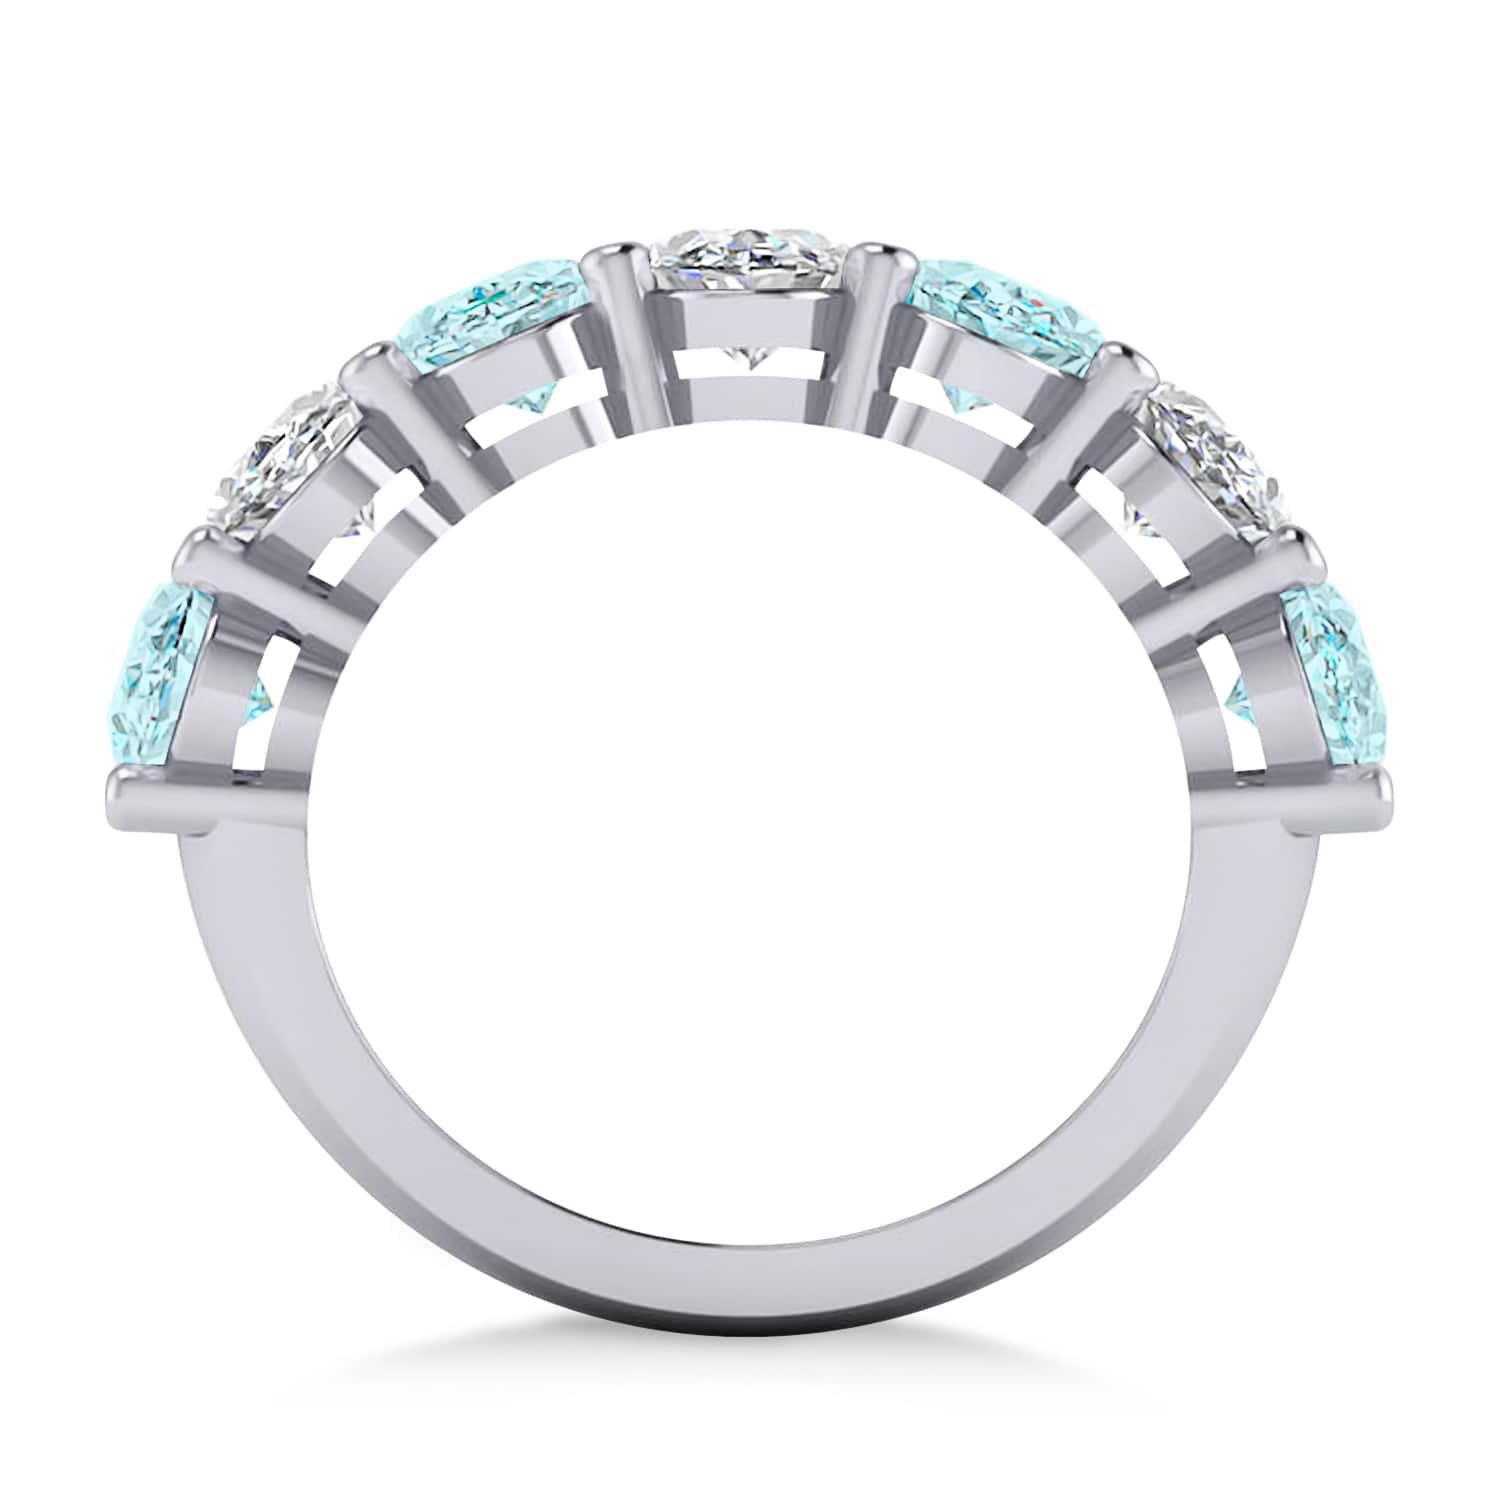 Oval Diamond & Aquamarine Seven Stone Ring 14k White Gold (1.40ct)